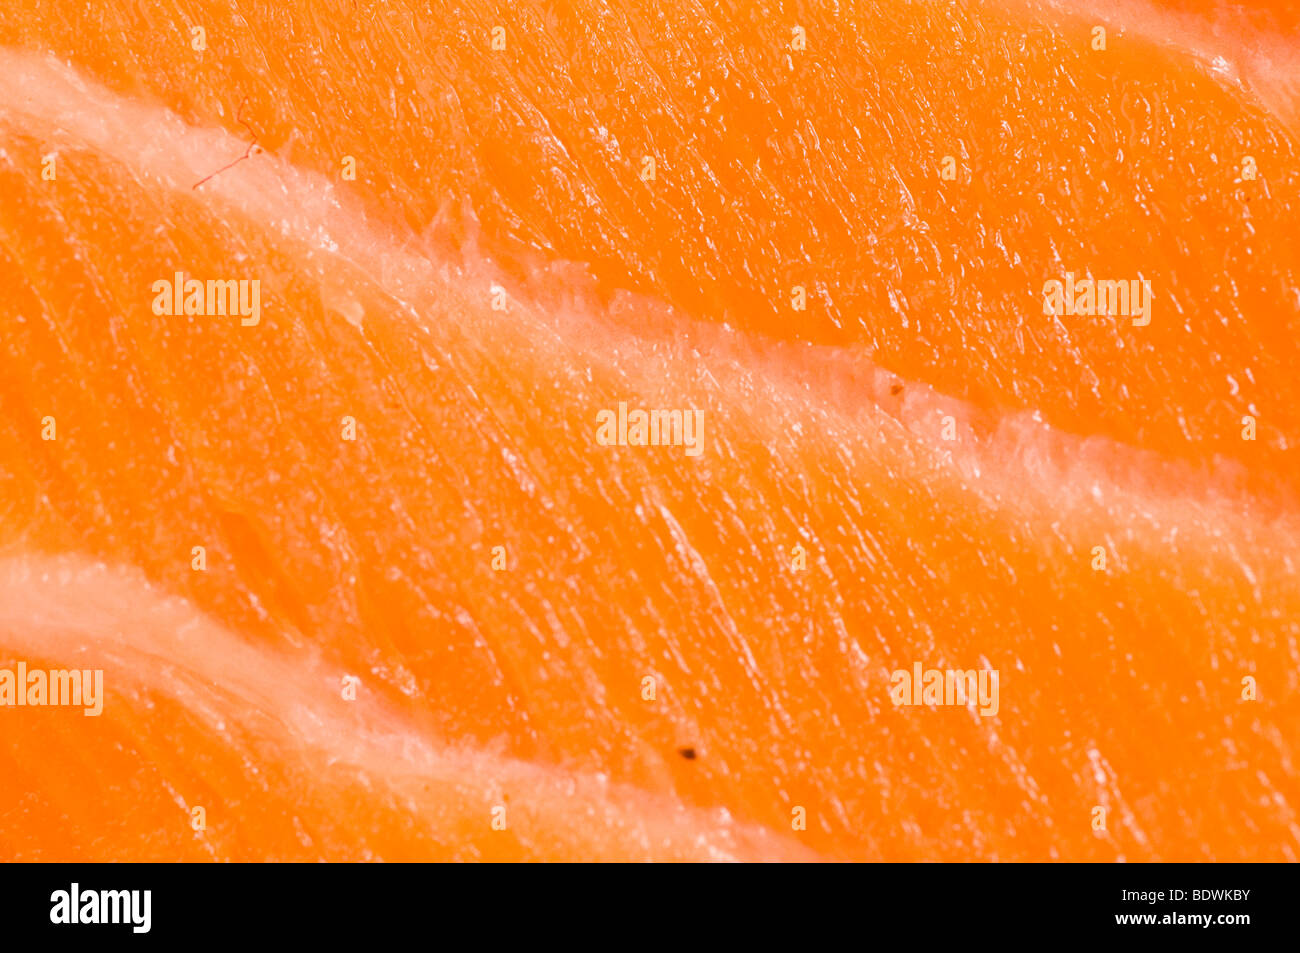 Raw Salmon Fish Fillet Stock Photo